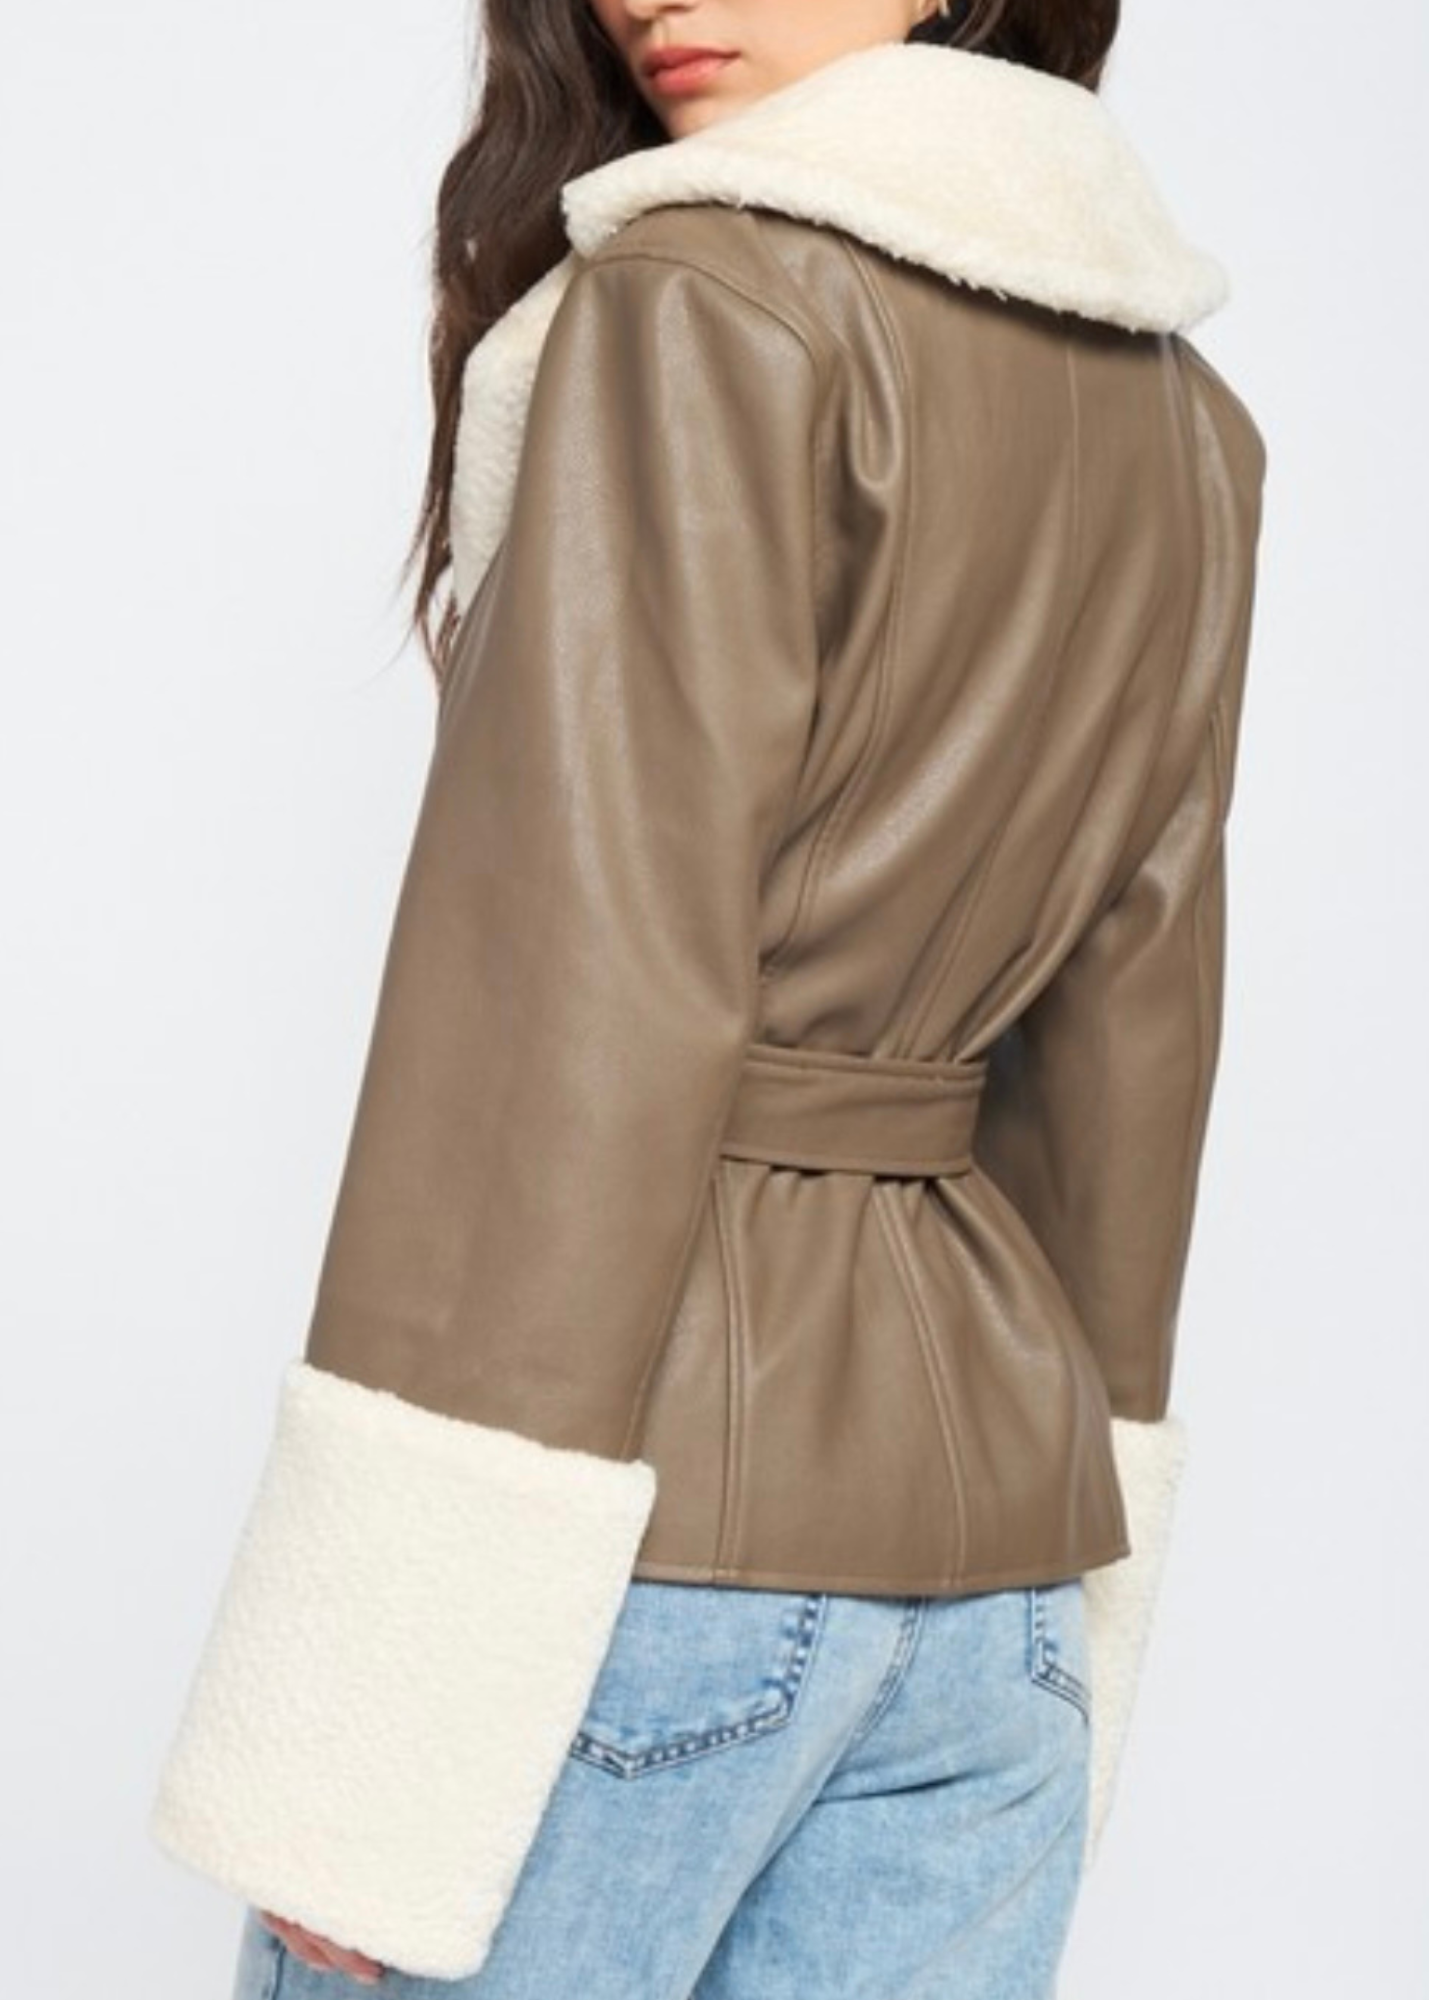 Lexi Leather Coat